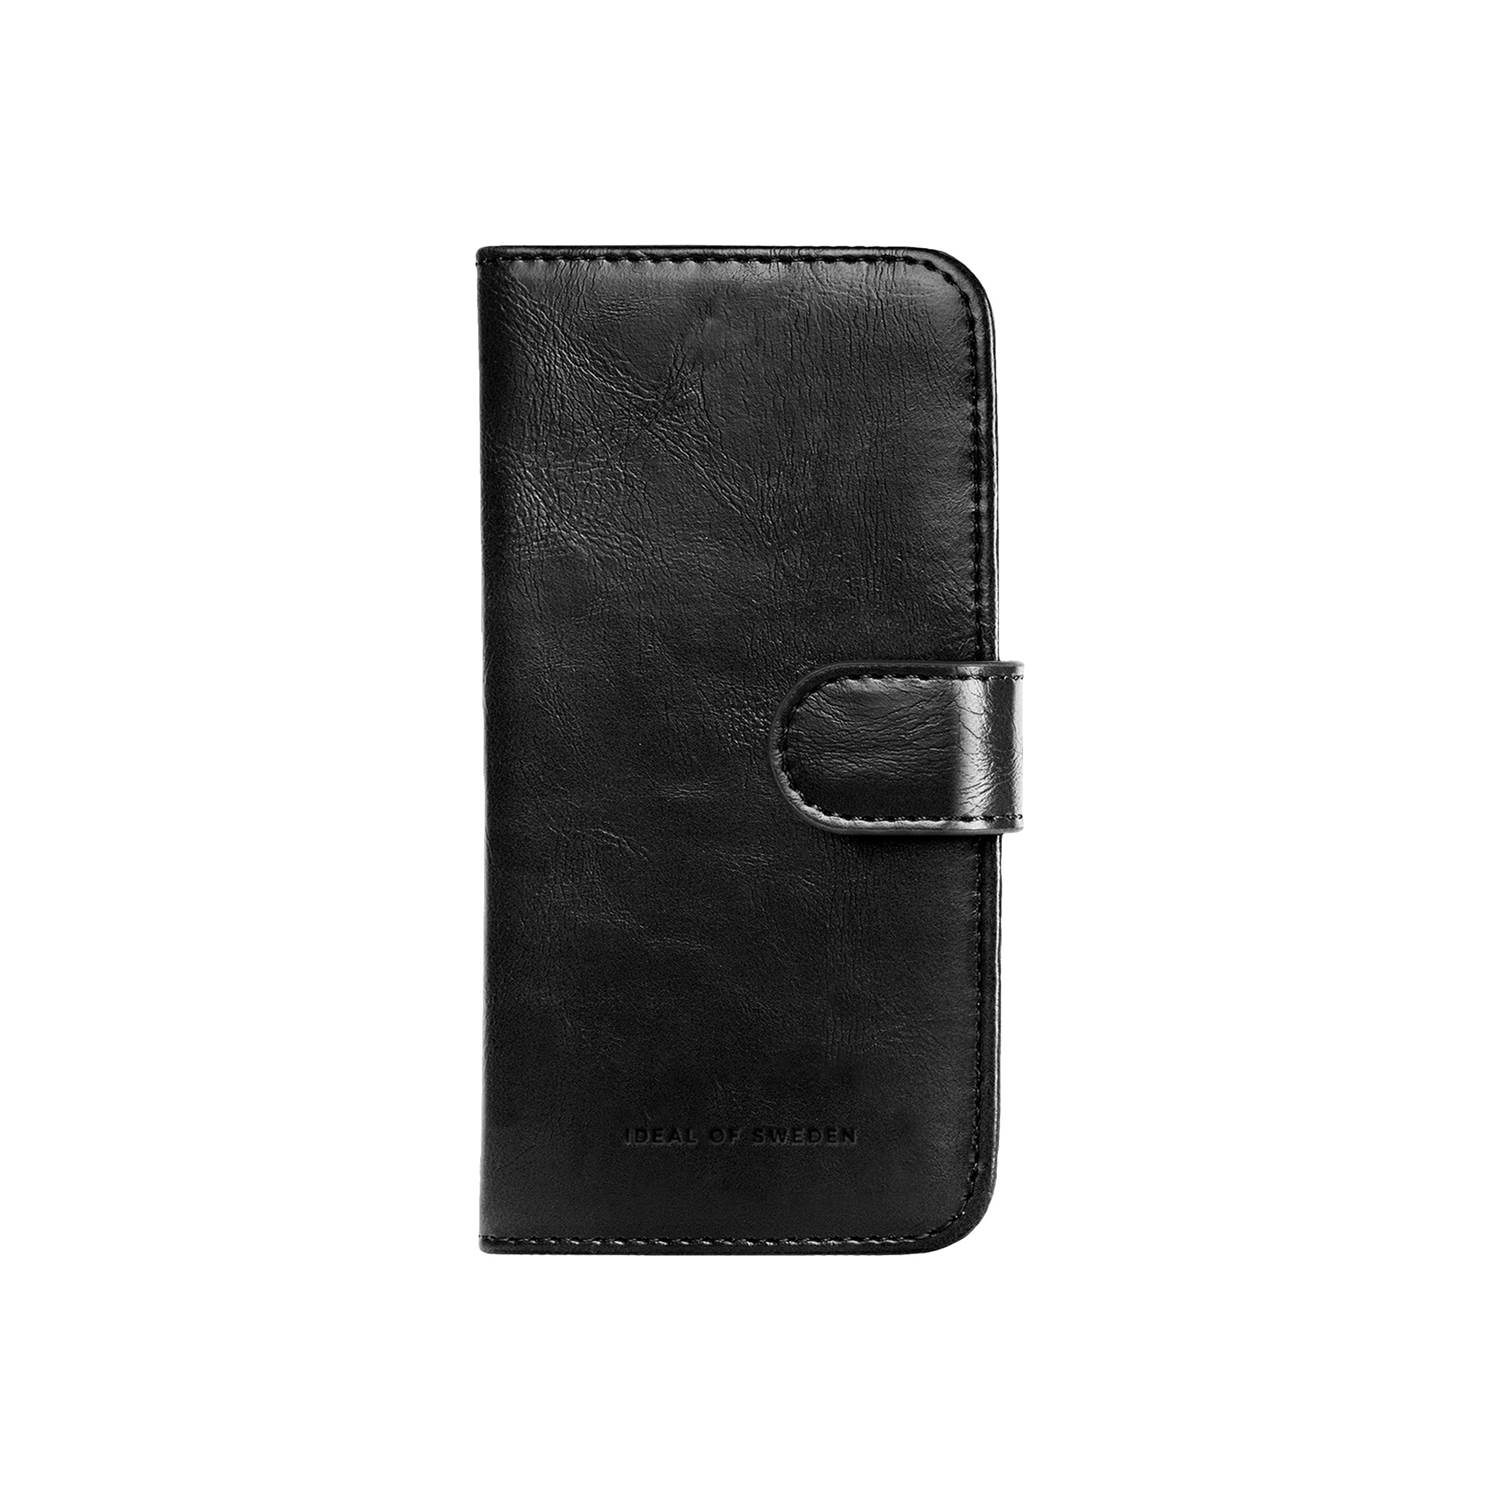 Ideal of sweden ideal magnet wallet+ iphone